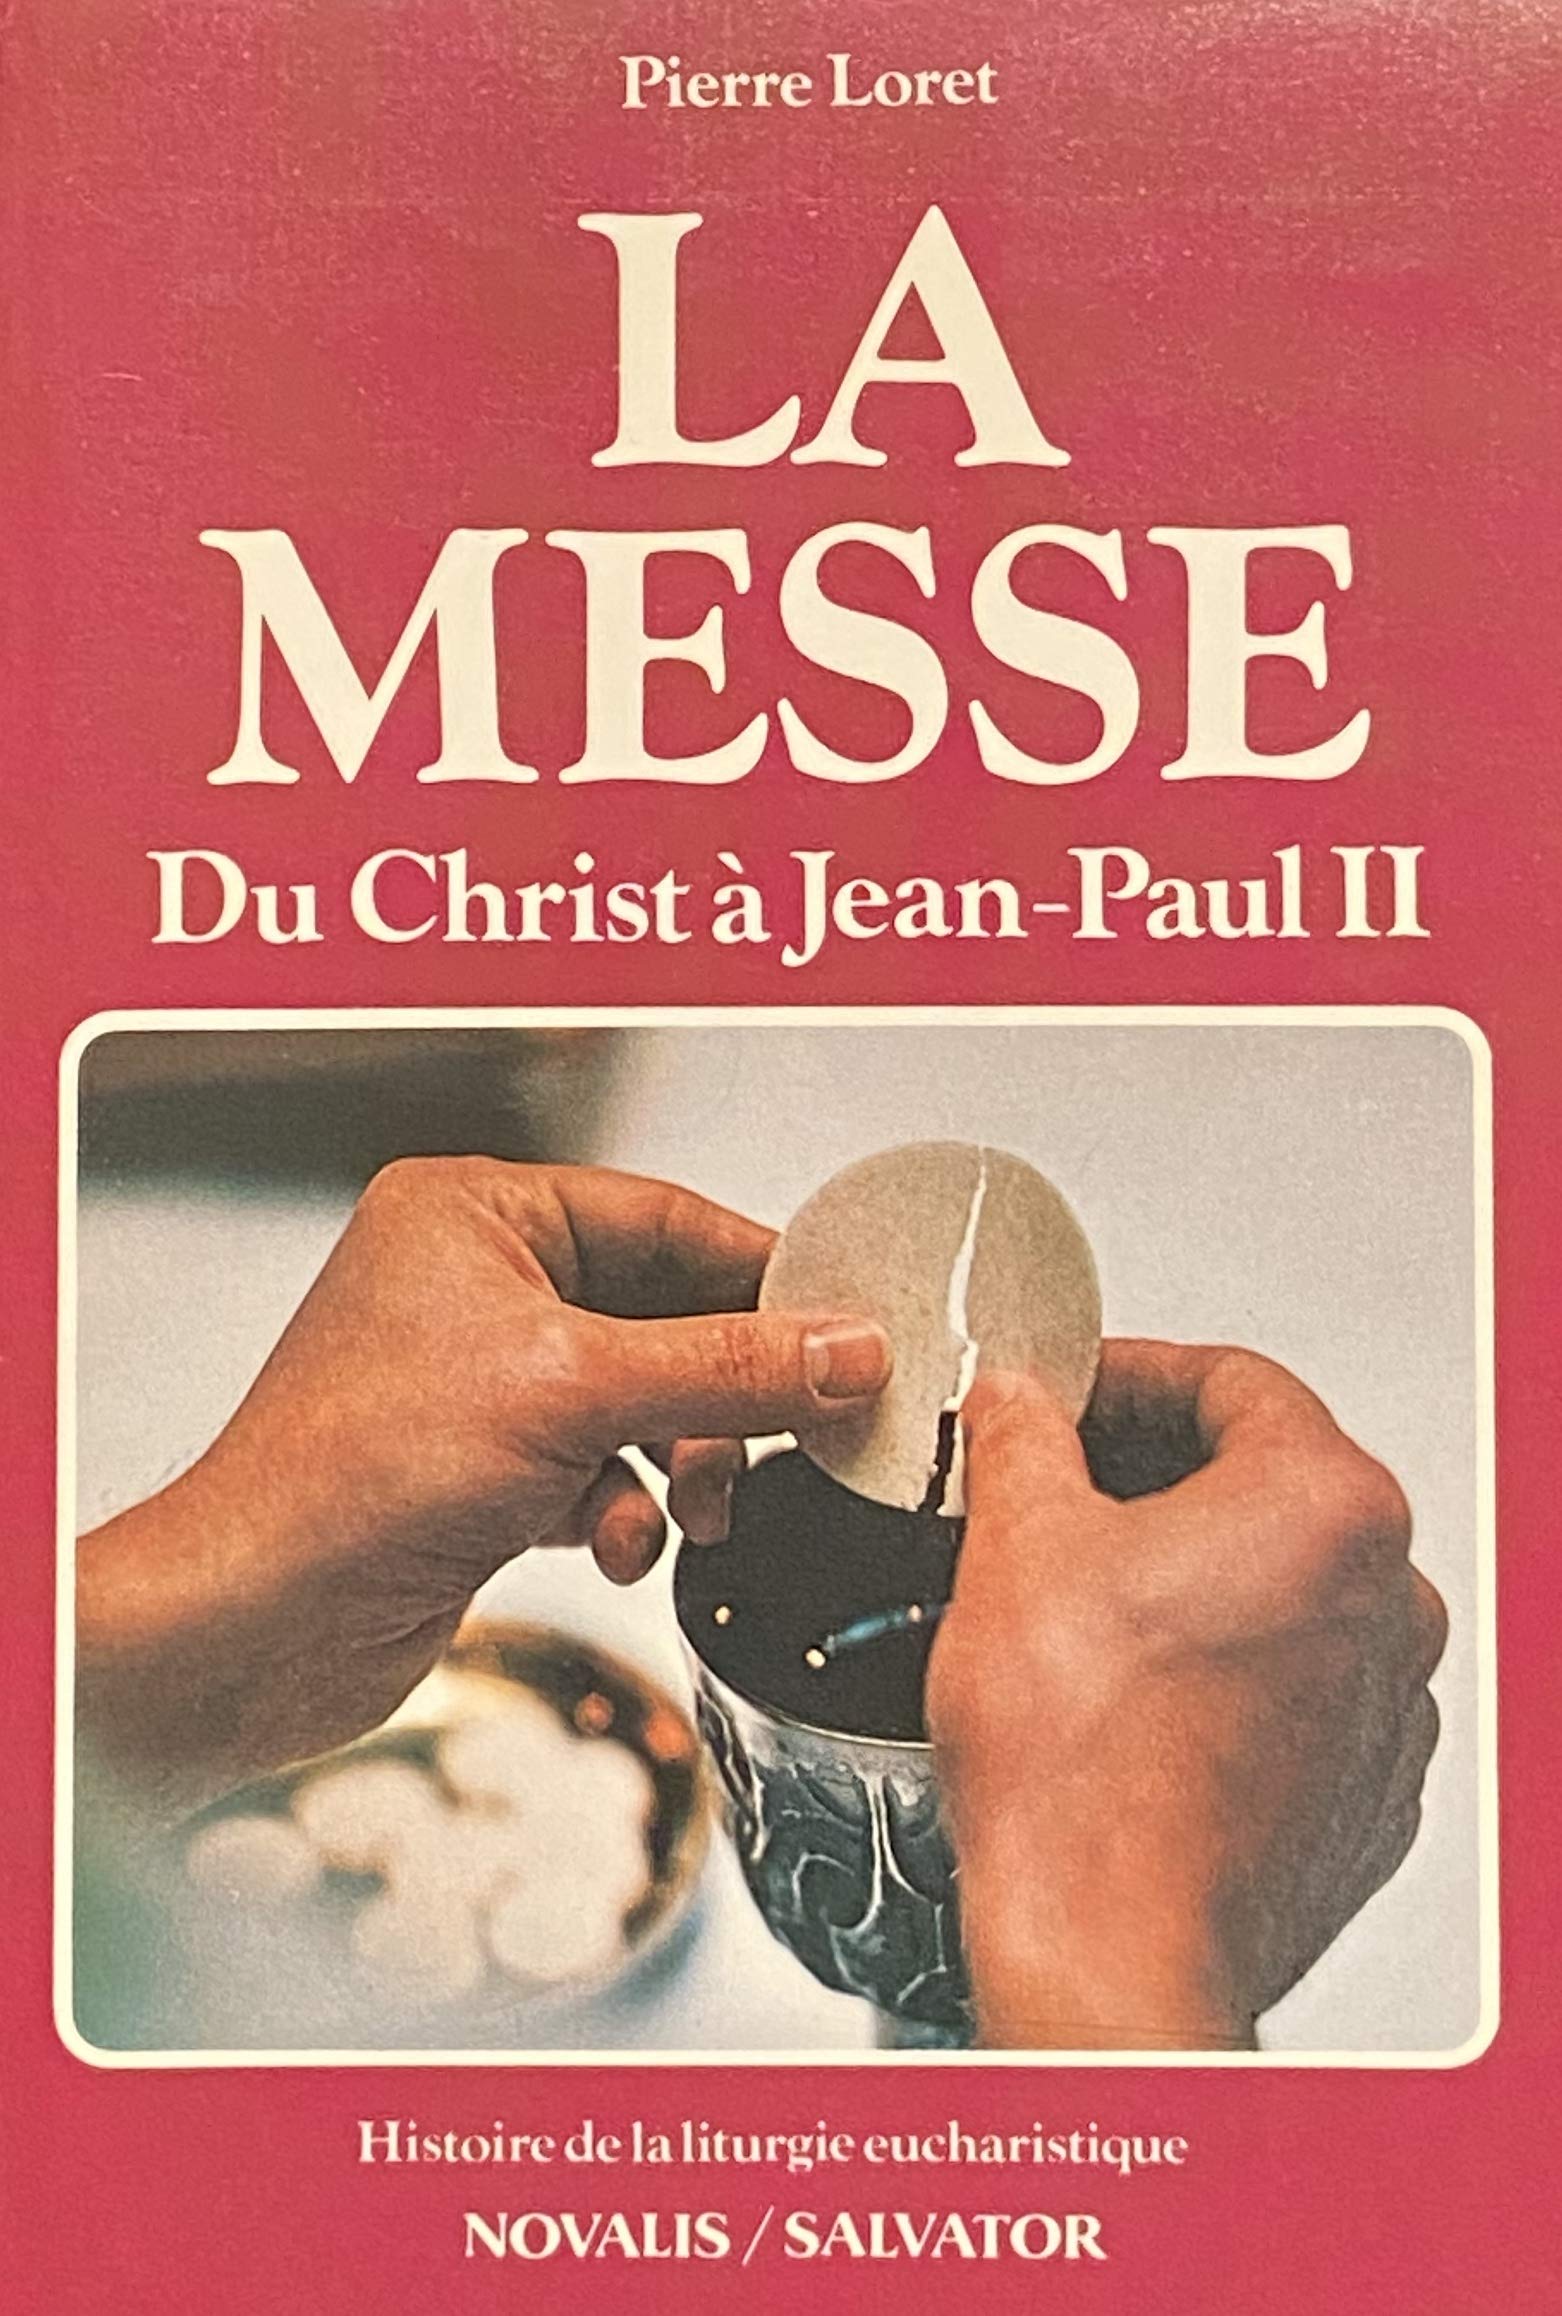 Livre ISBN 2890880761 La Messe : Du Christ à Jean-Paul II (Pierre Loret)